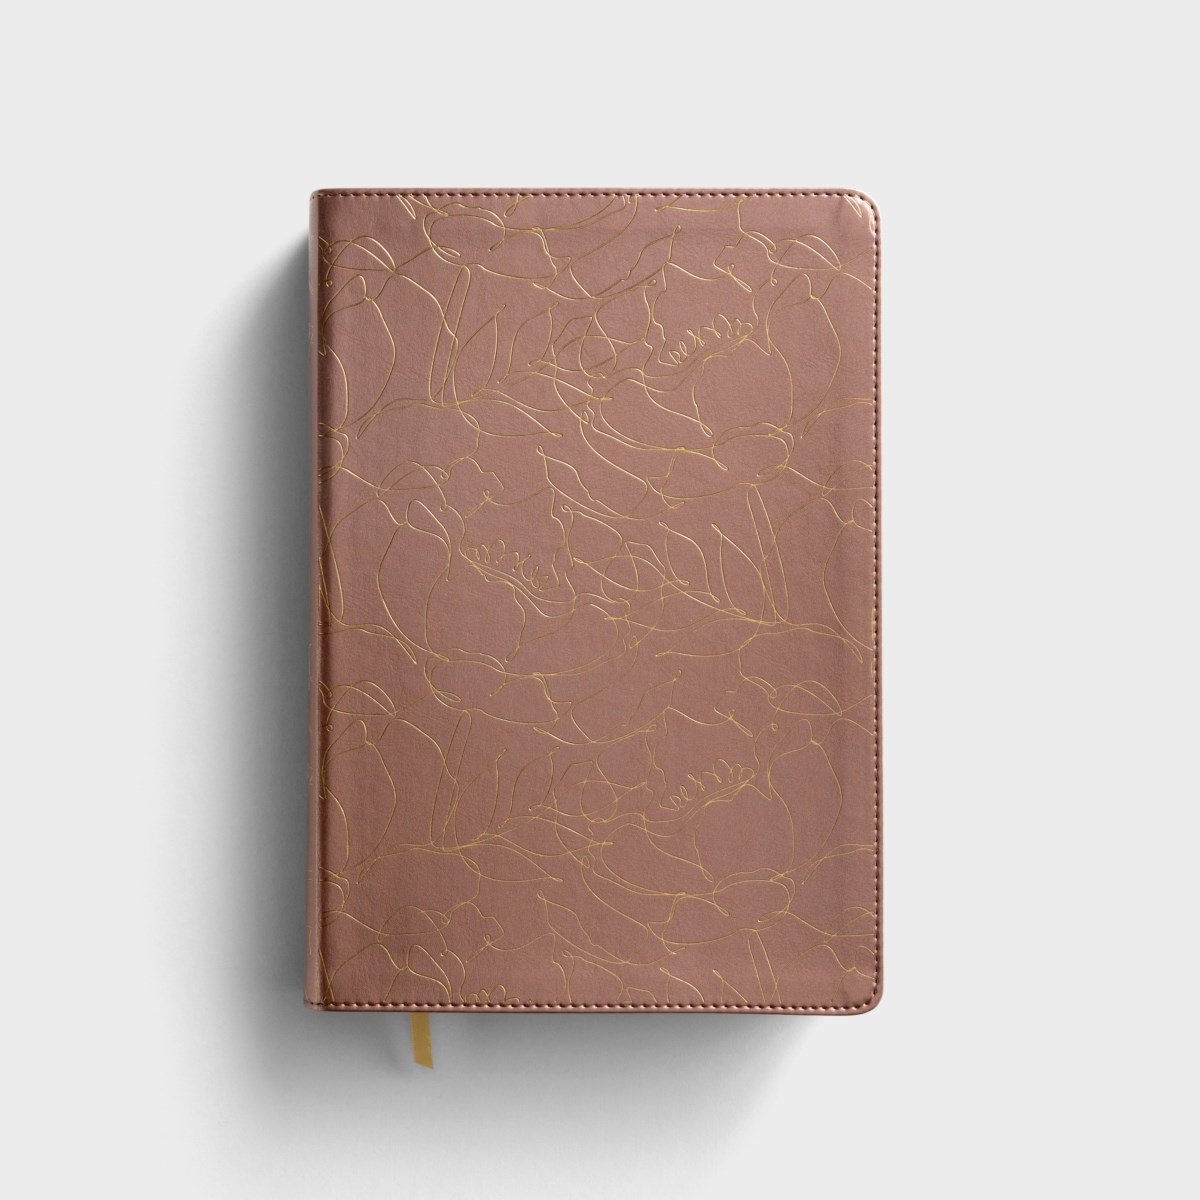 NLT - DaySpring Signature Collection - Super Giant Print Bible - Blush Floral LeatherLike - Filament Enabled